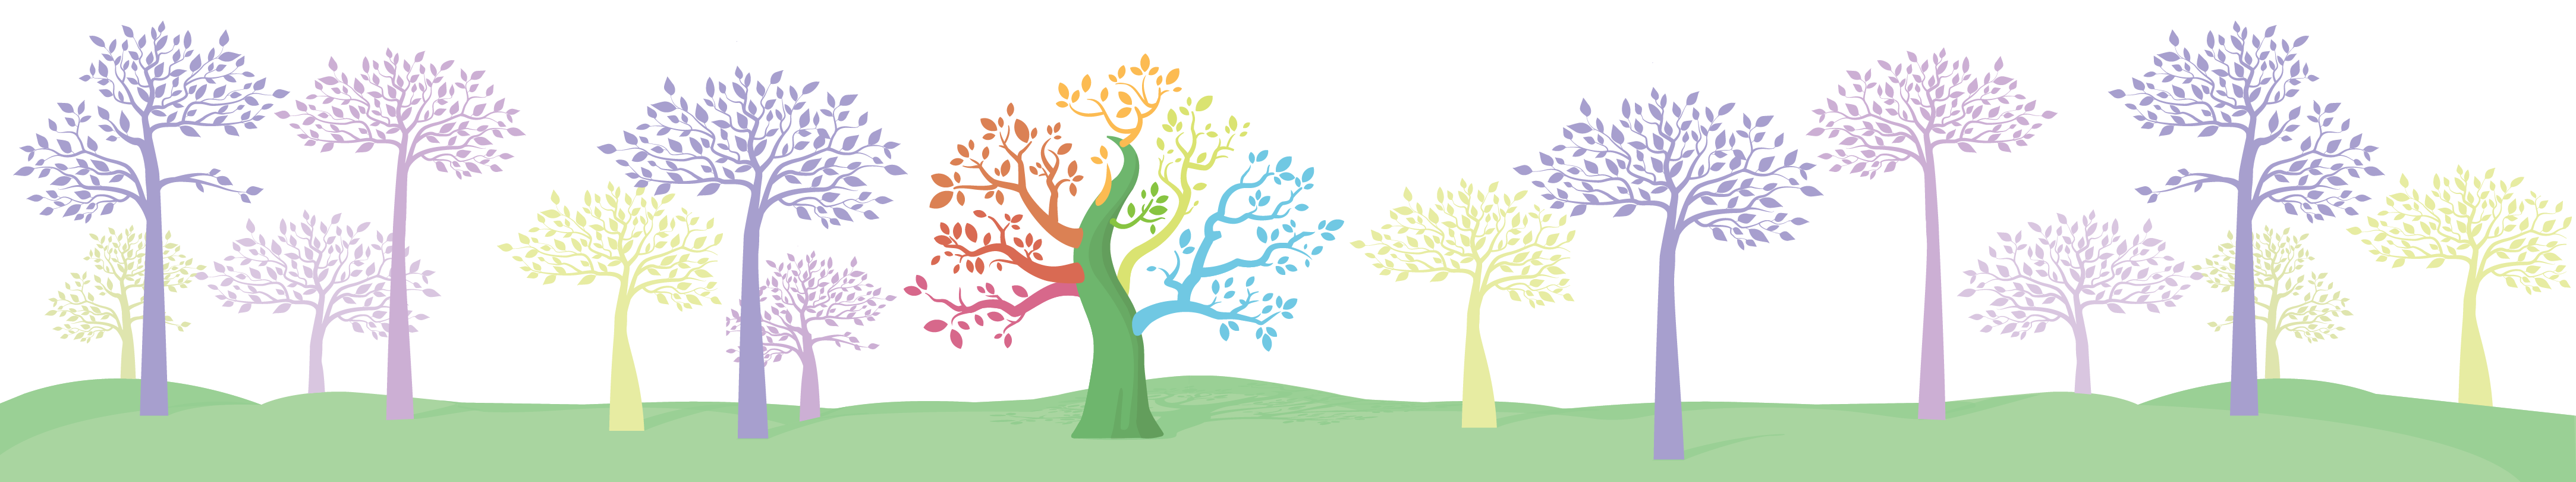 illustration of trees, one tree has multi-colored limbs